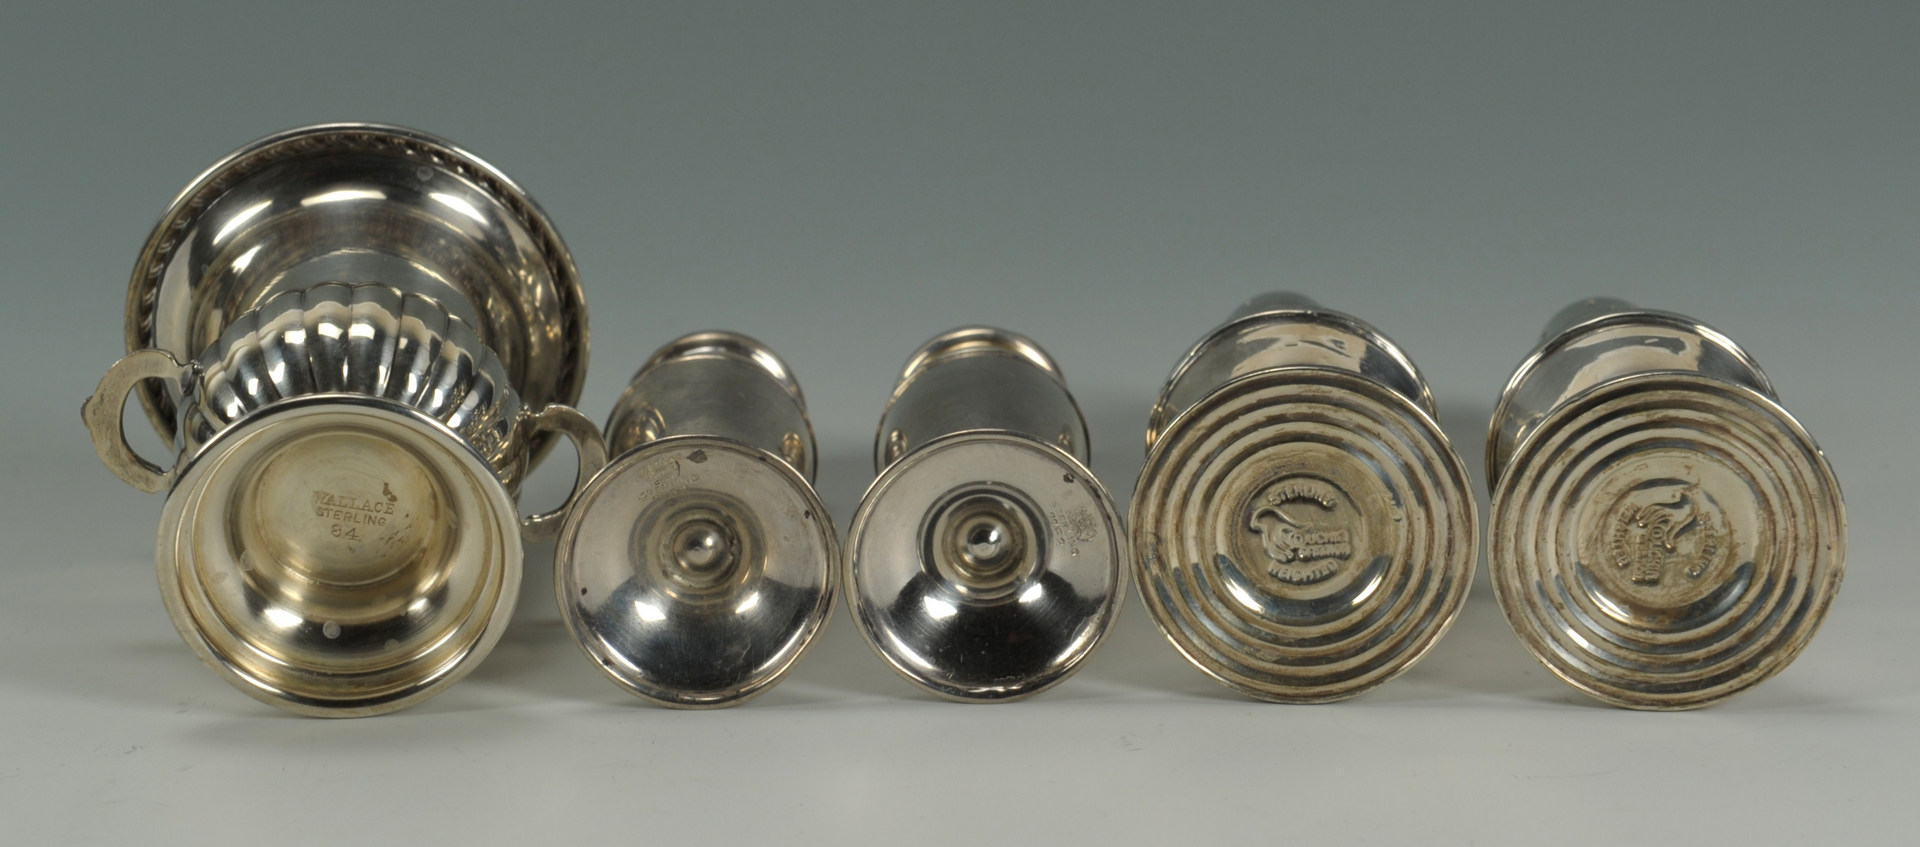 Lot 428: 7 items assorted silver hollowware inc. teapots